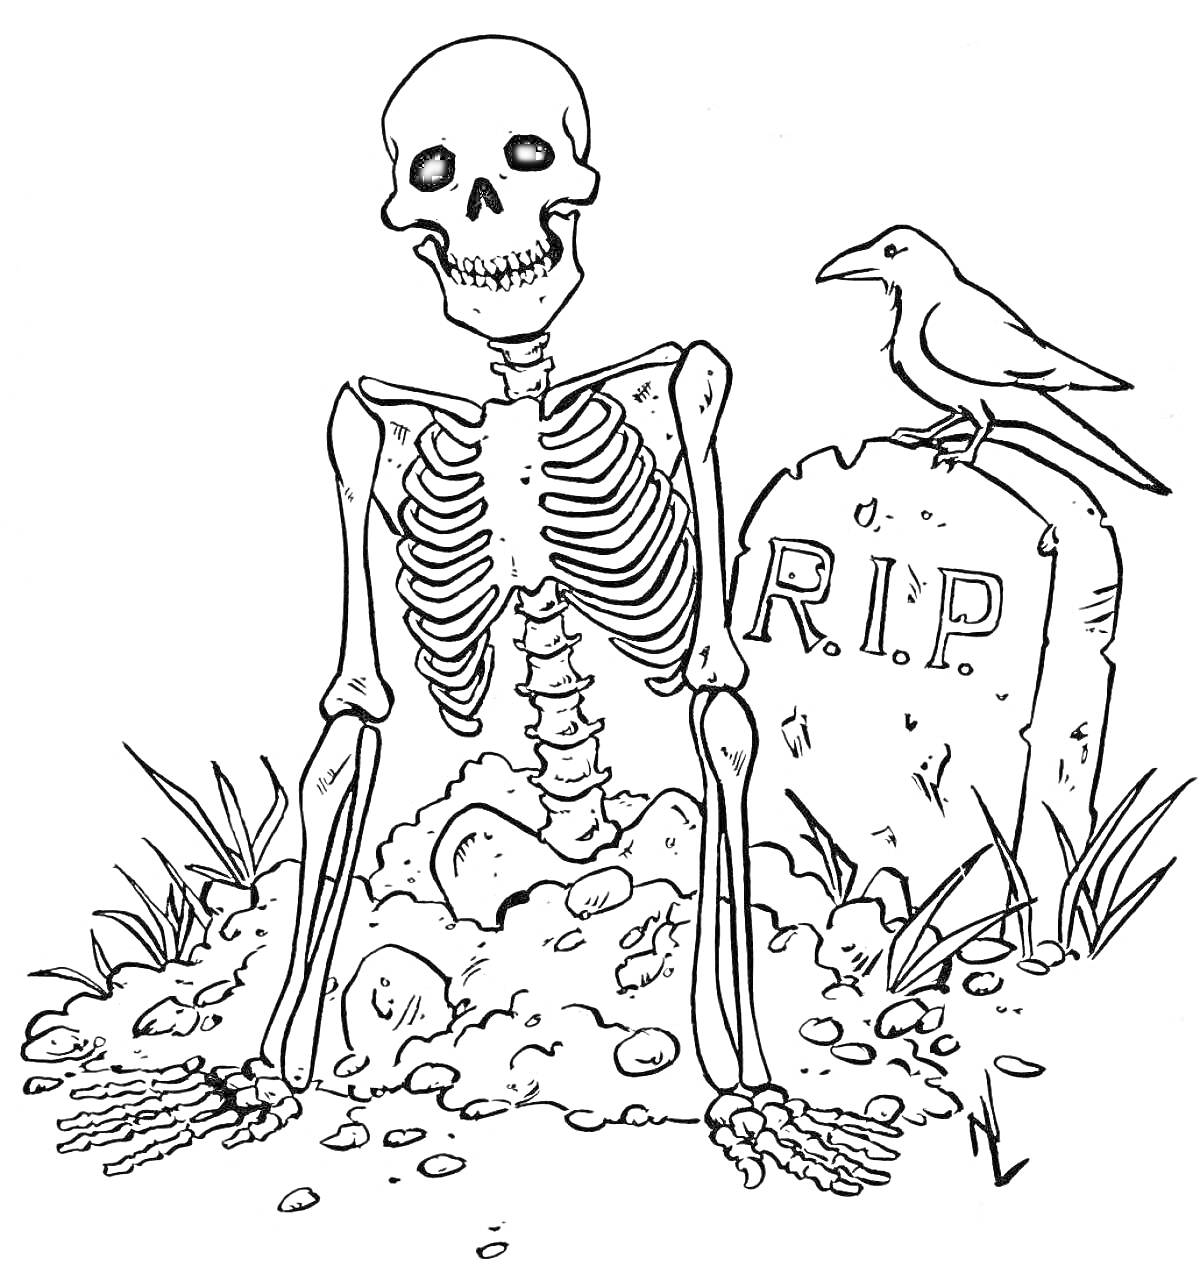 Раскраска Скелет в могиле, надгробие с надписью R.I.P., ворон на надгробии, трава